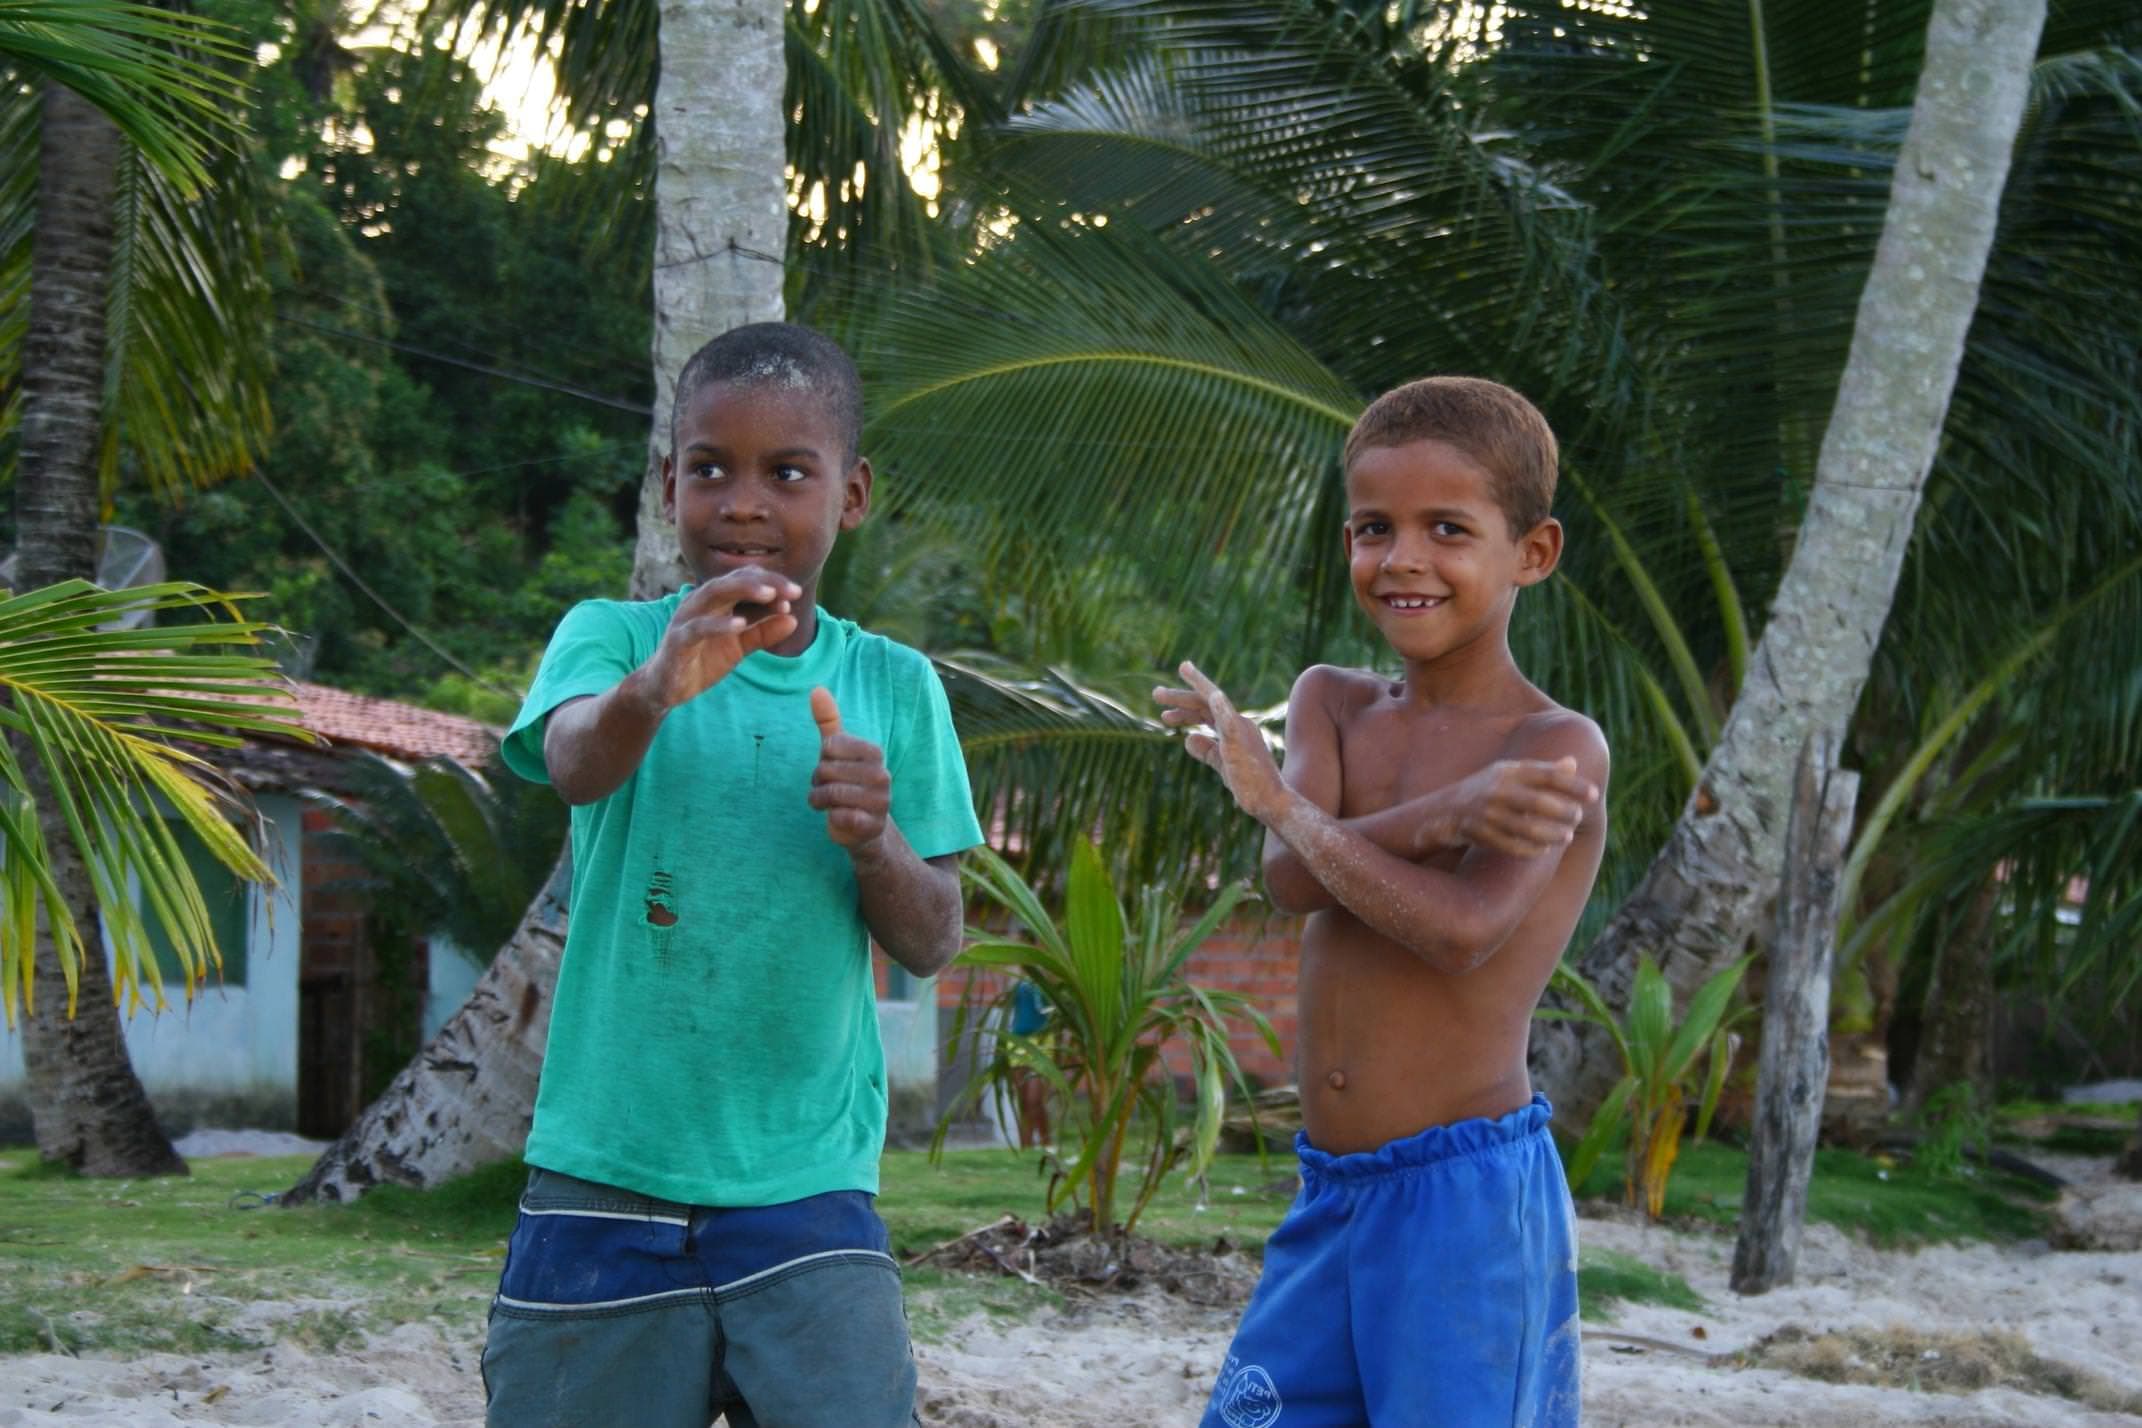 Brazil bahia boipeba island smiling children